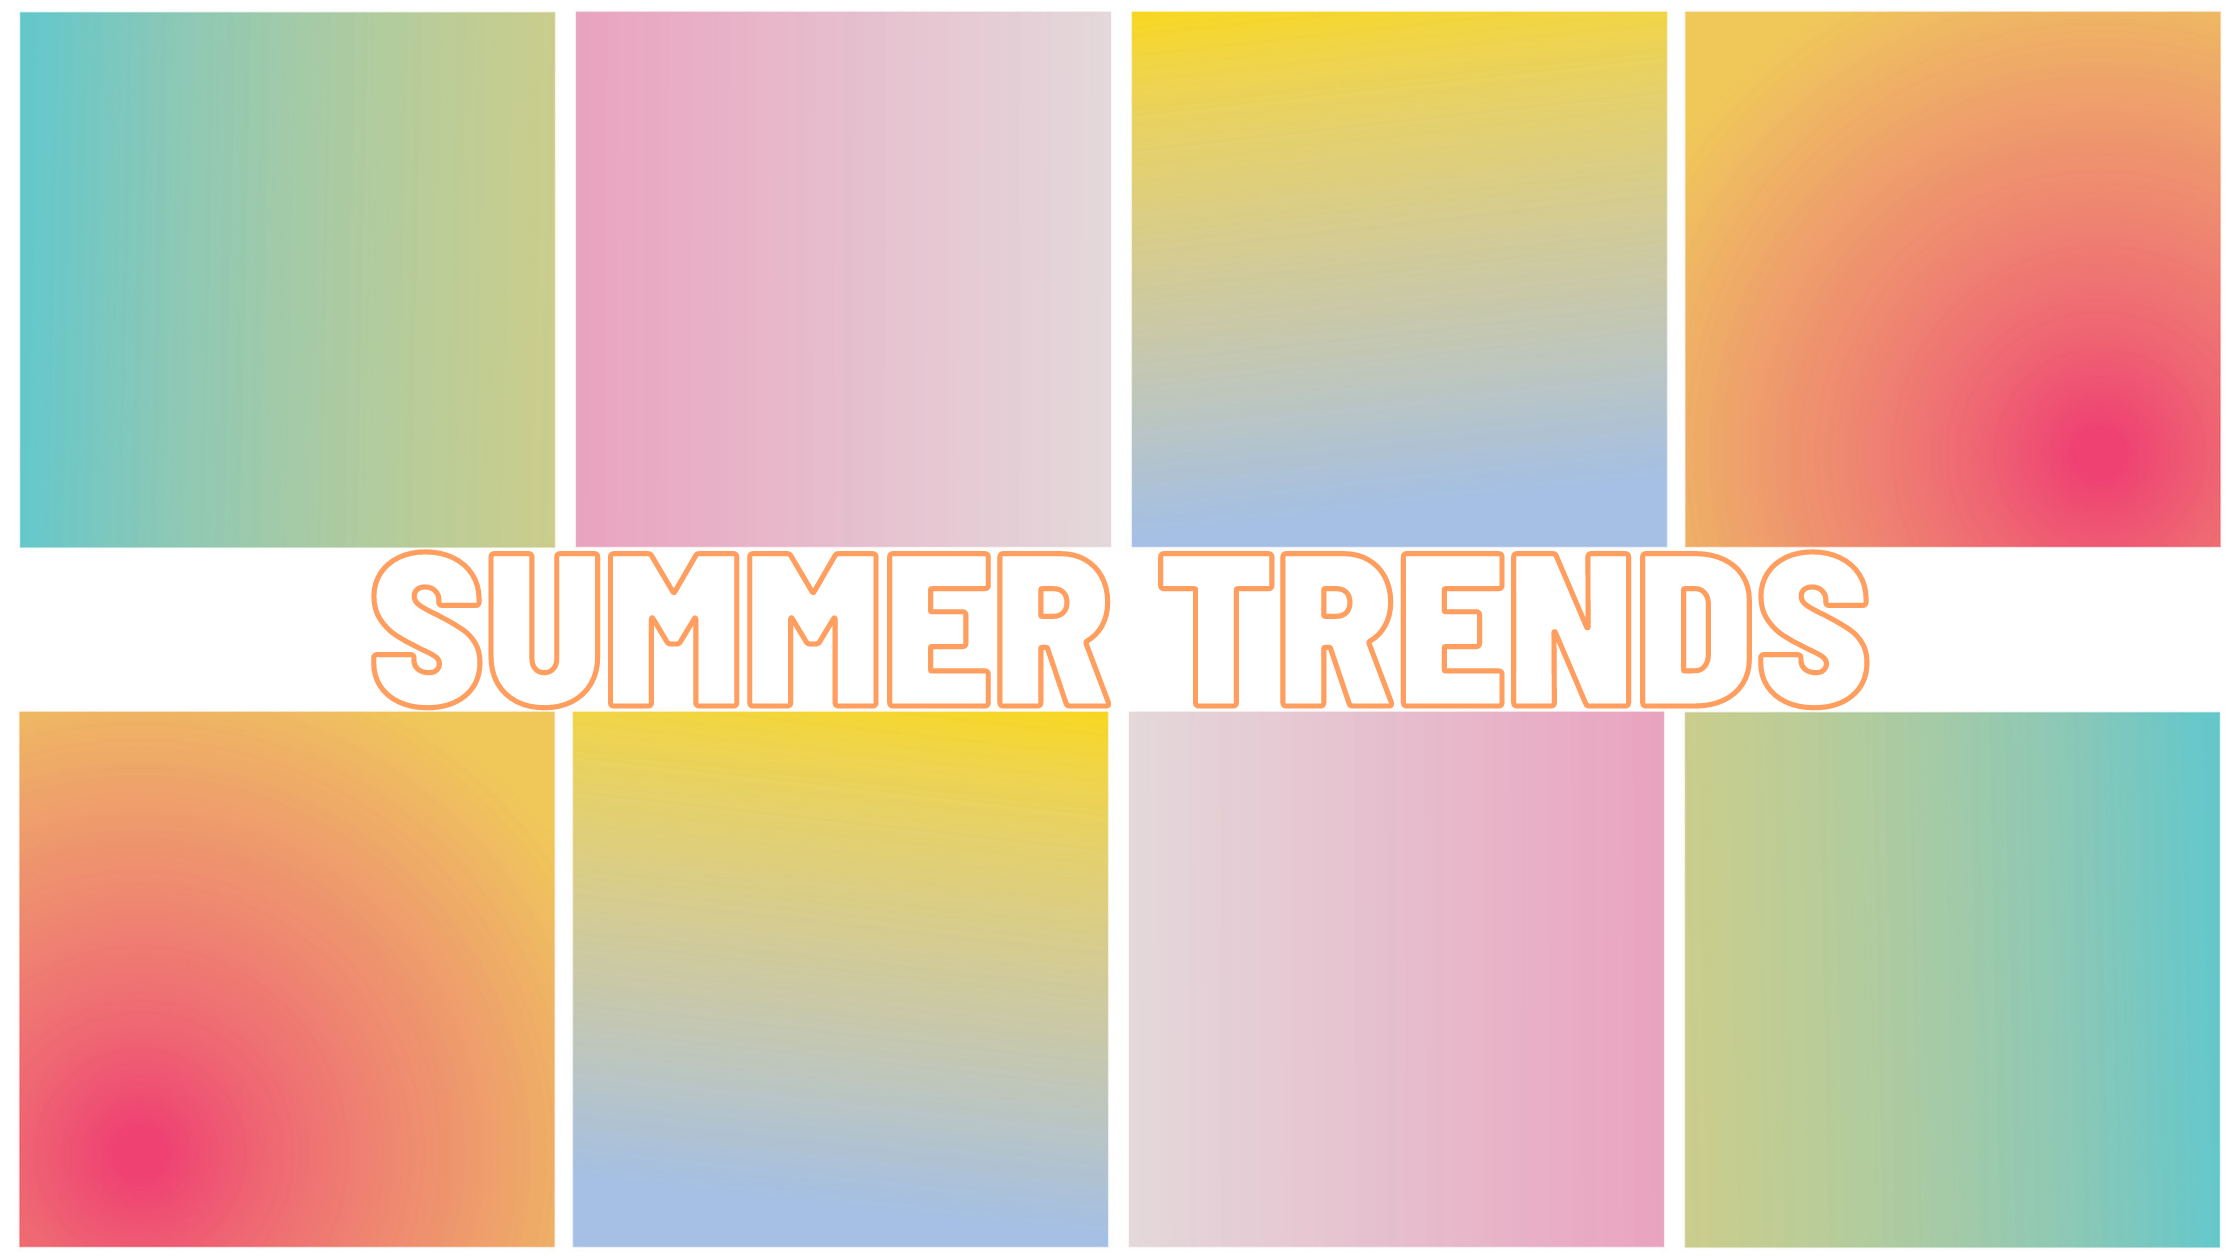 Summer trends